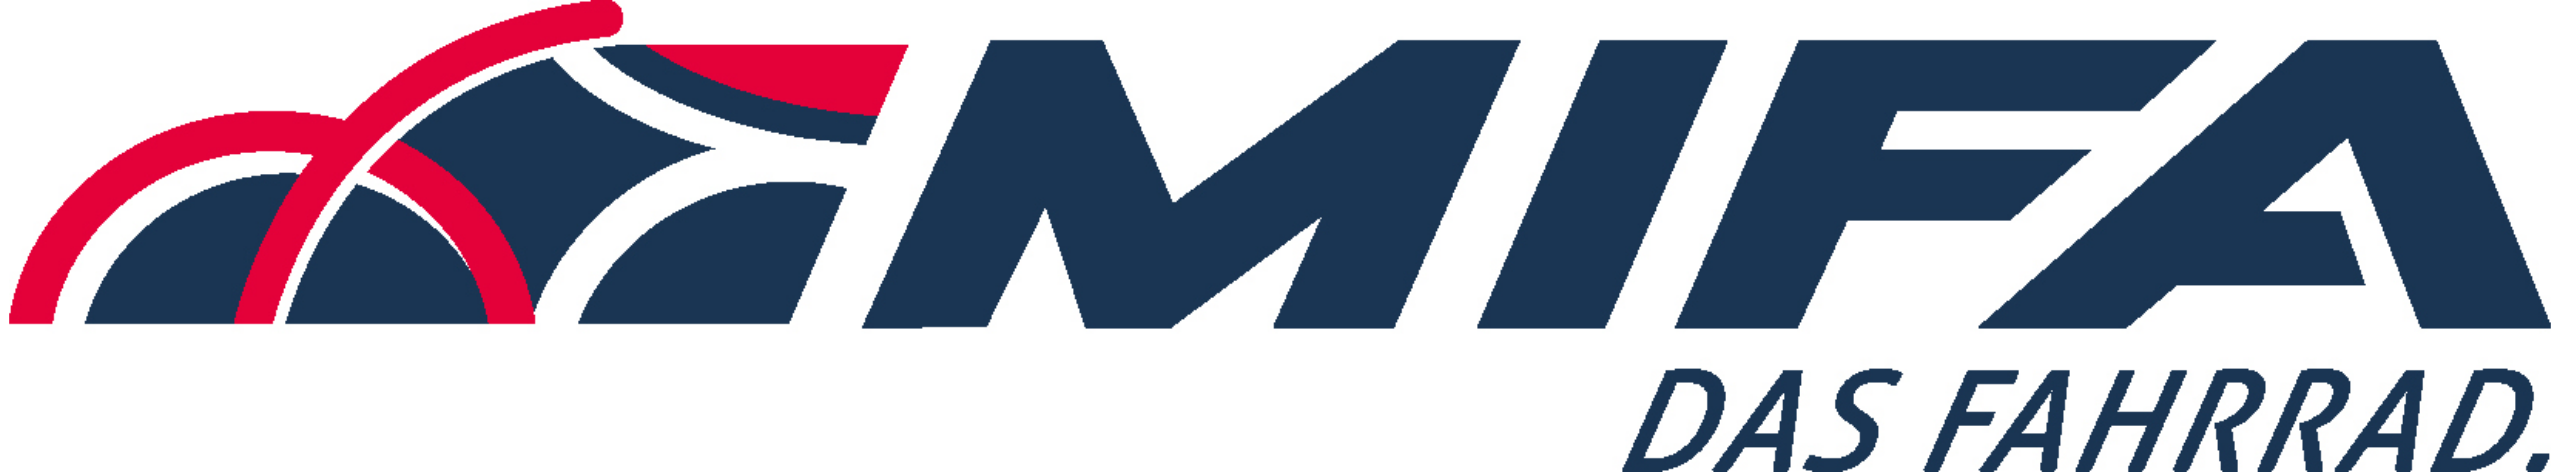 File:Olfa Corporation company logo.svg - Wikipedia